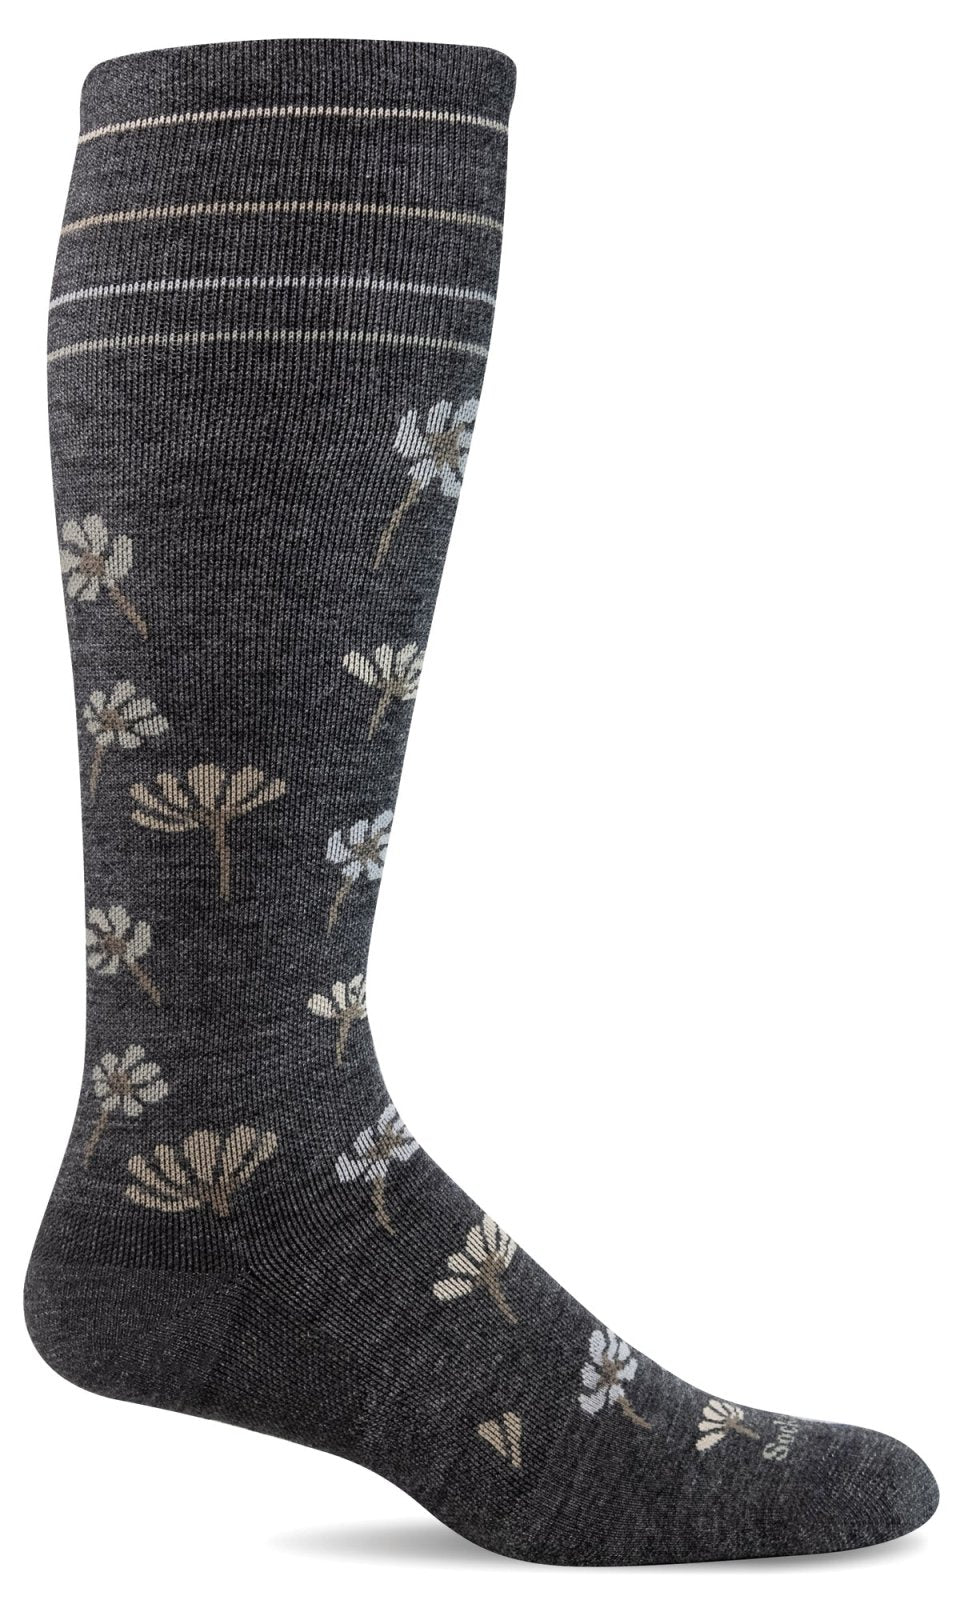 Compression Socks for Women -  Canada